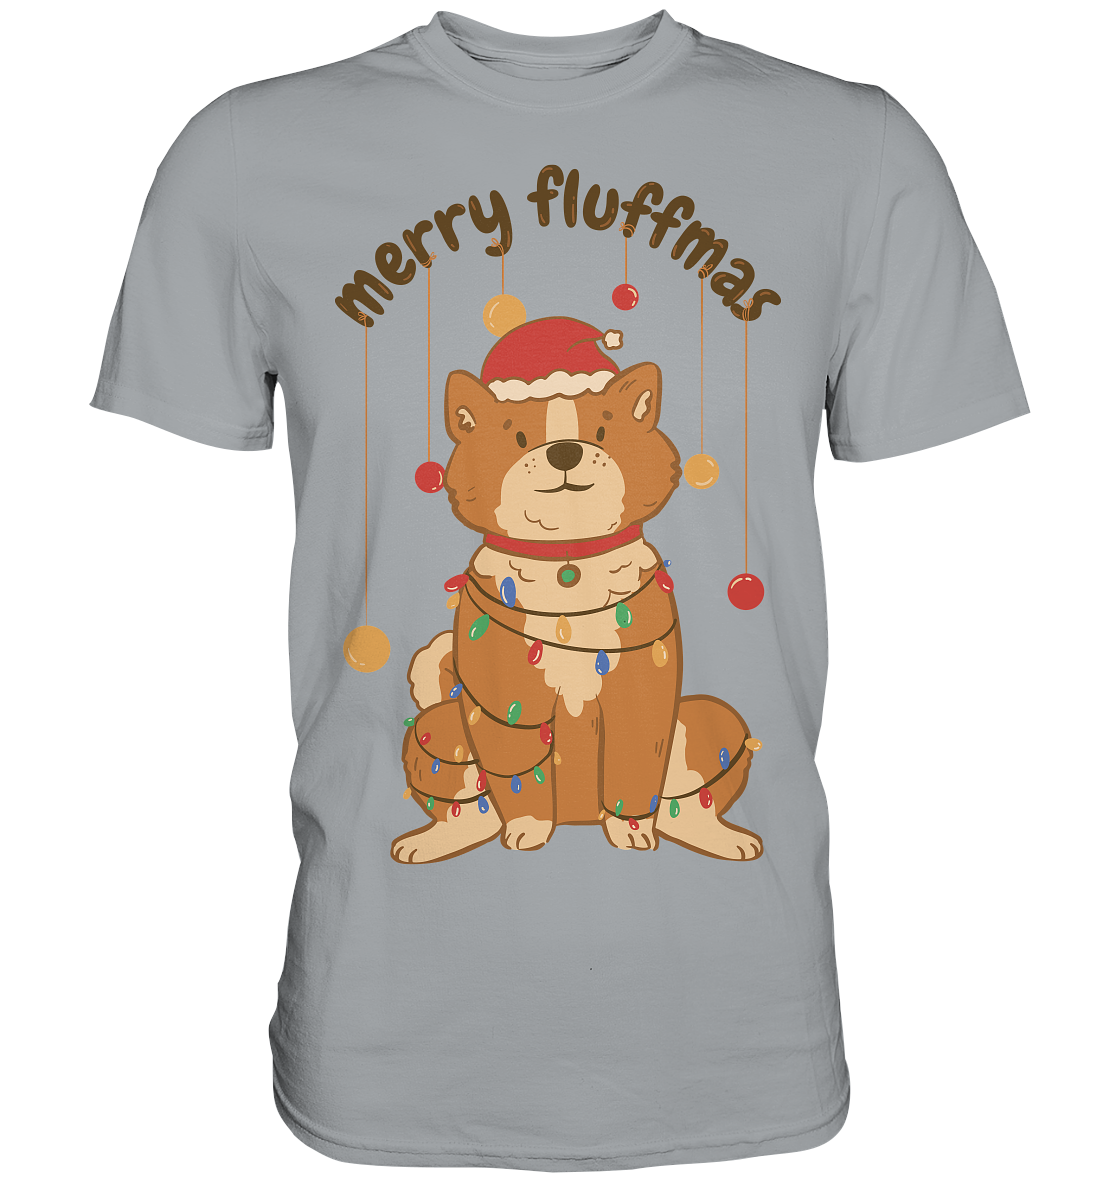 Weihnachtliches Motiv Fun Merry Fluffmas - Classic Shirt